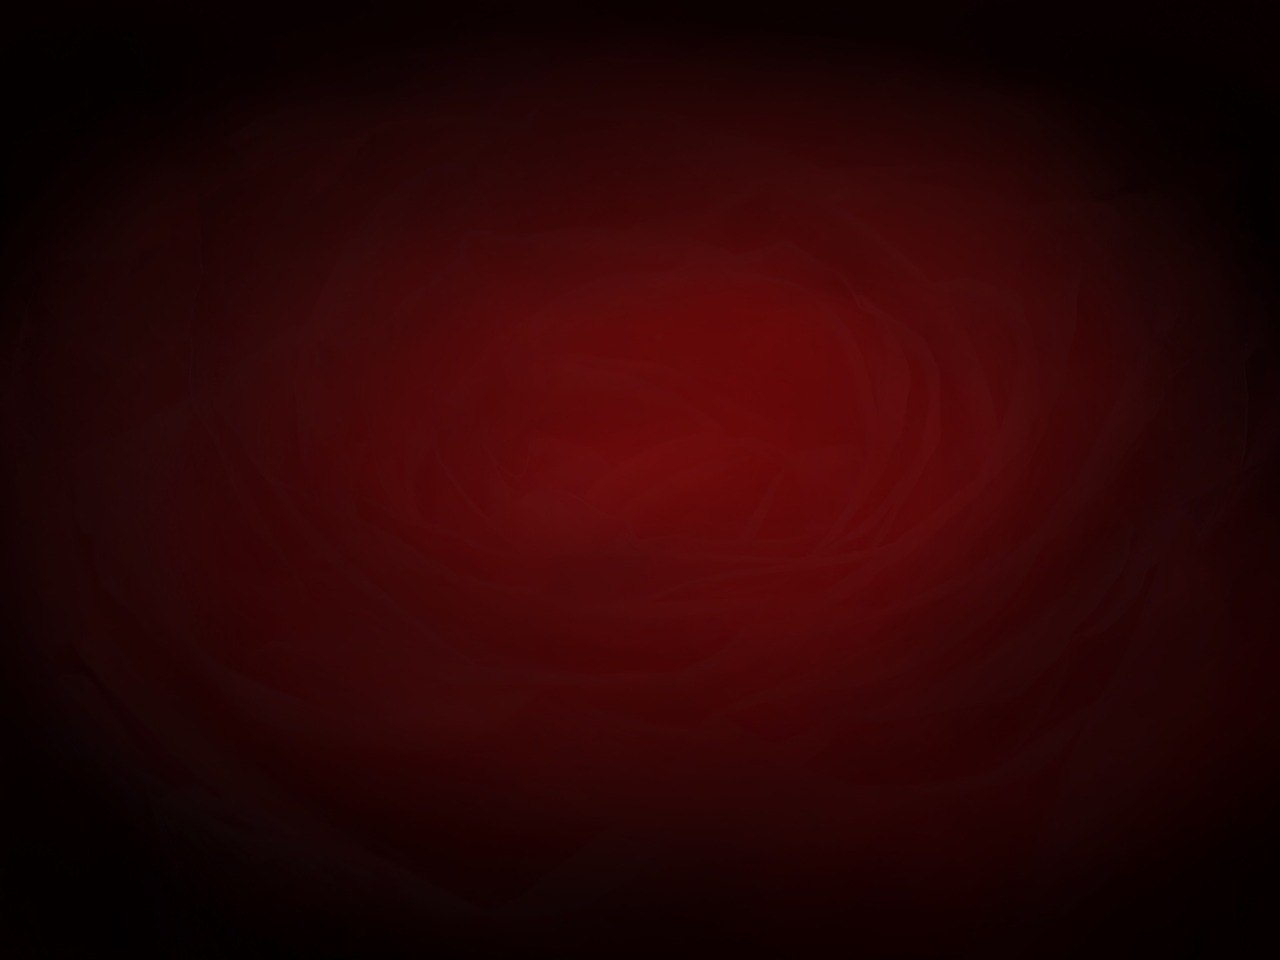 background red blur free photo